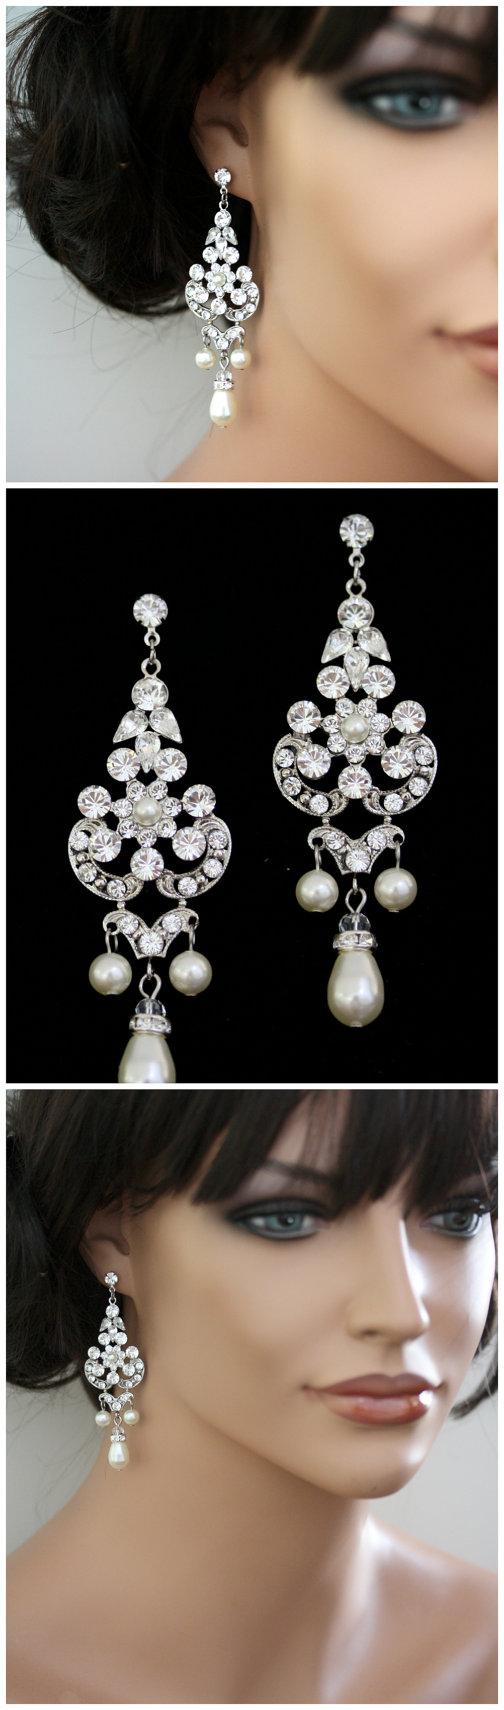 زفاف - Chandelier Bridal Earrings Statement Wedding Earrings Swarovski Rhinestone Crystal Pearl Teardrop Vintage Wedding Jewelry CELESTE